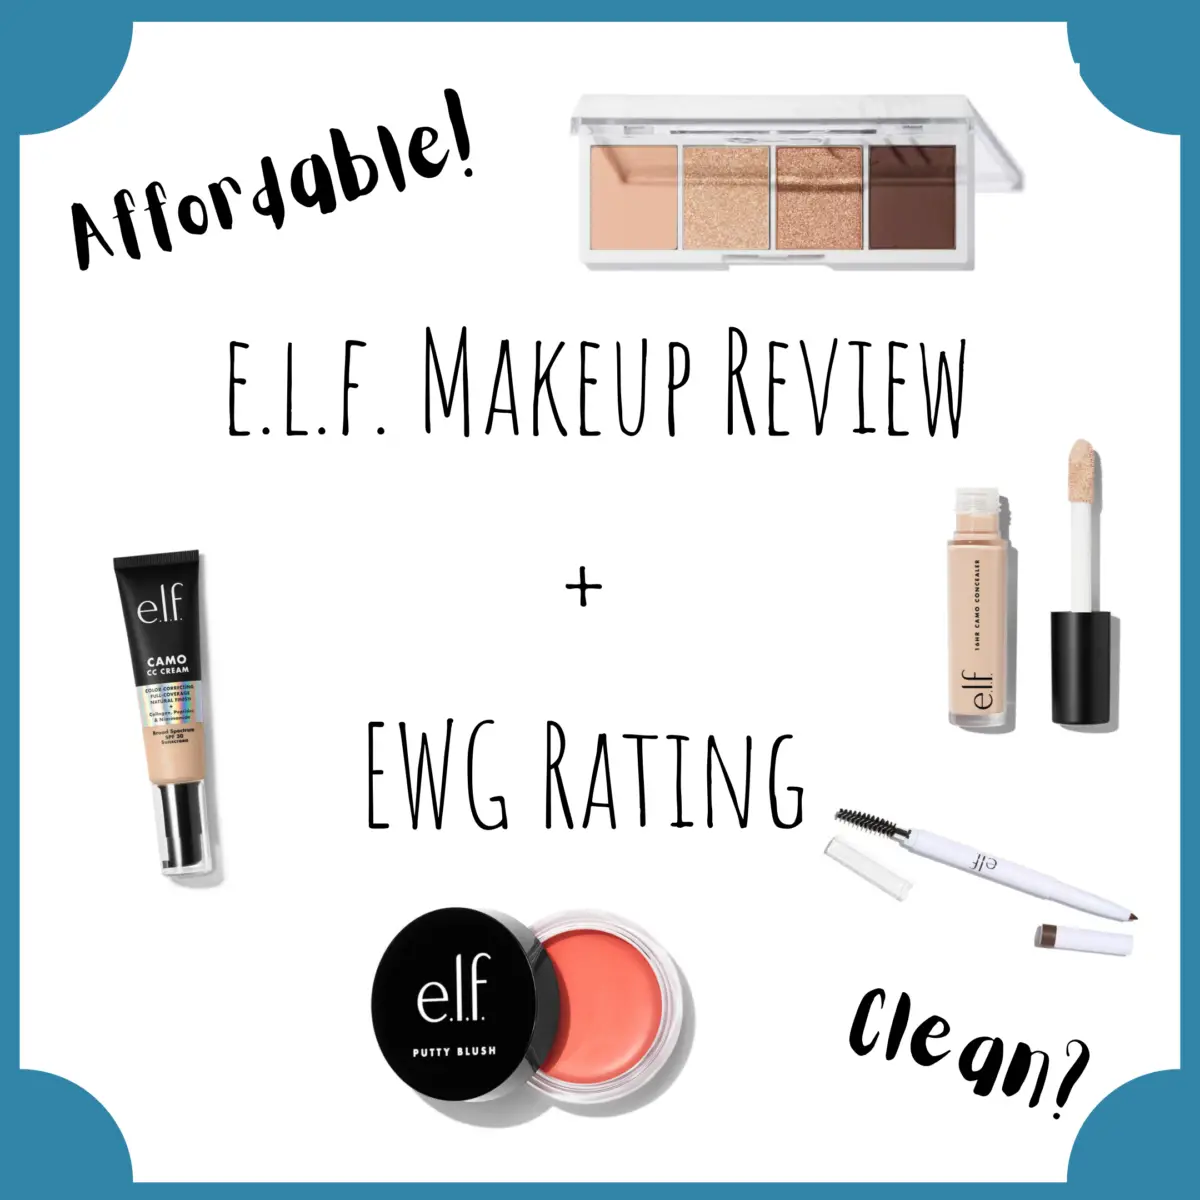 elf makeup review + ewg rating